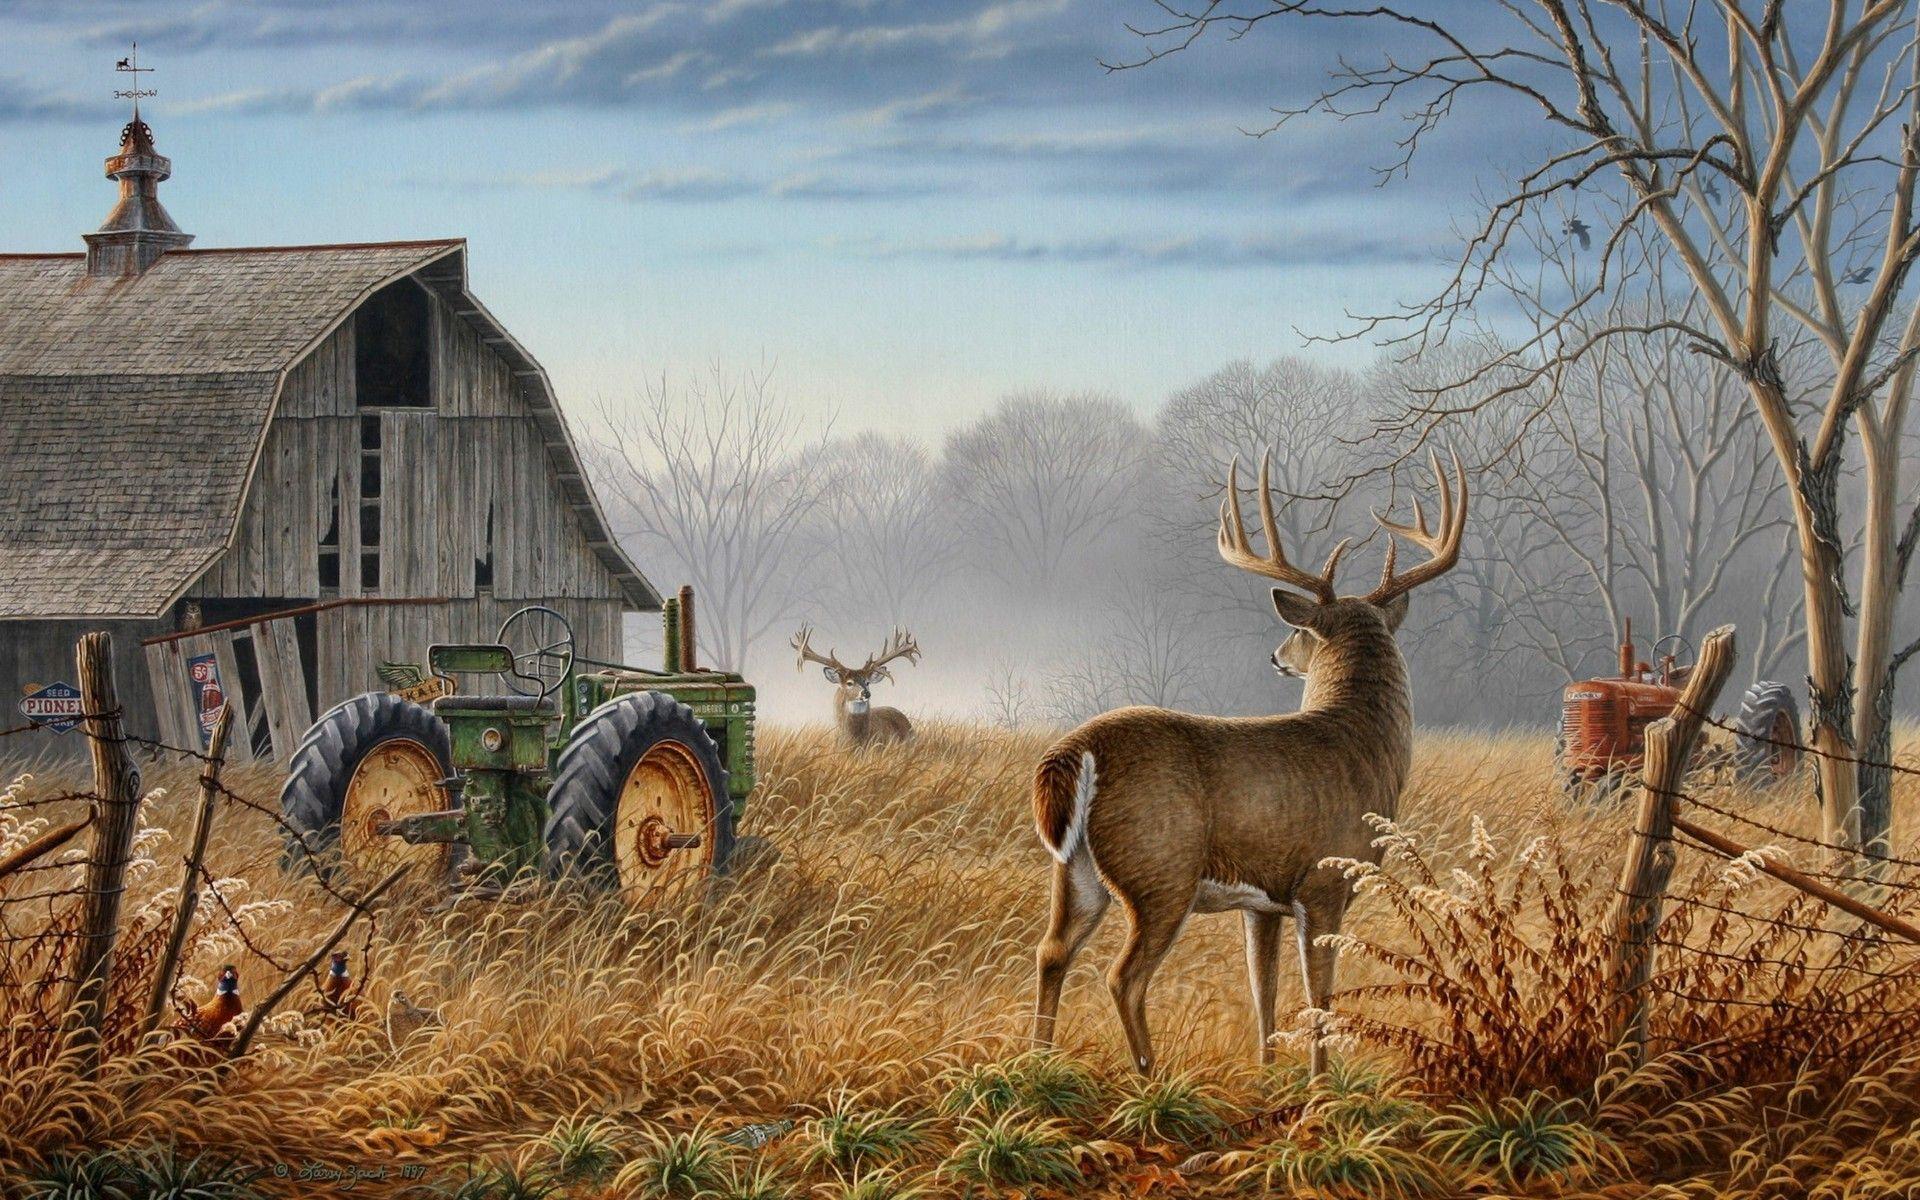 Deer Hunting Backgrounds